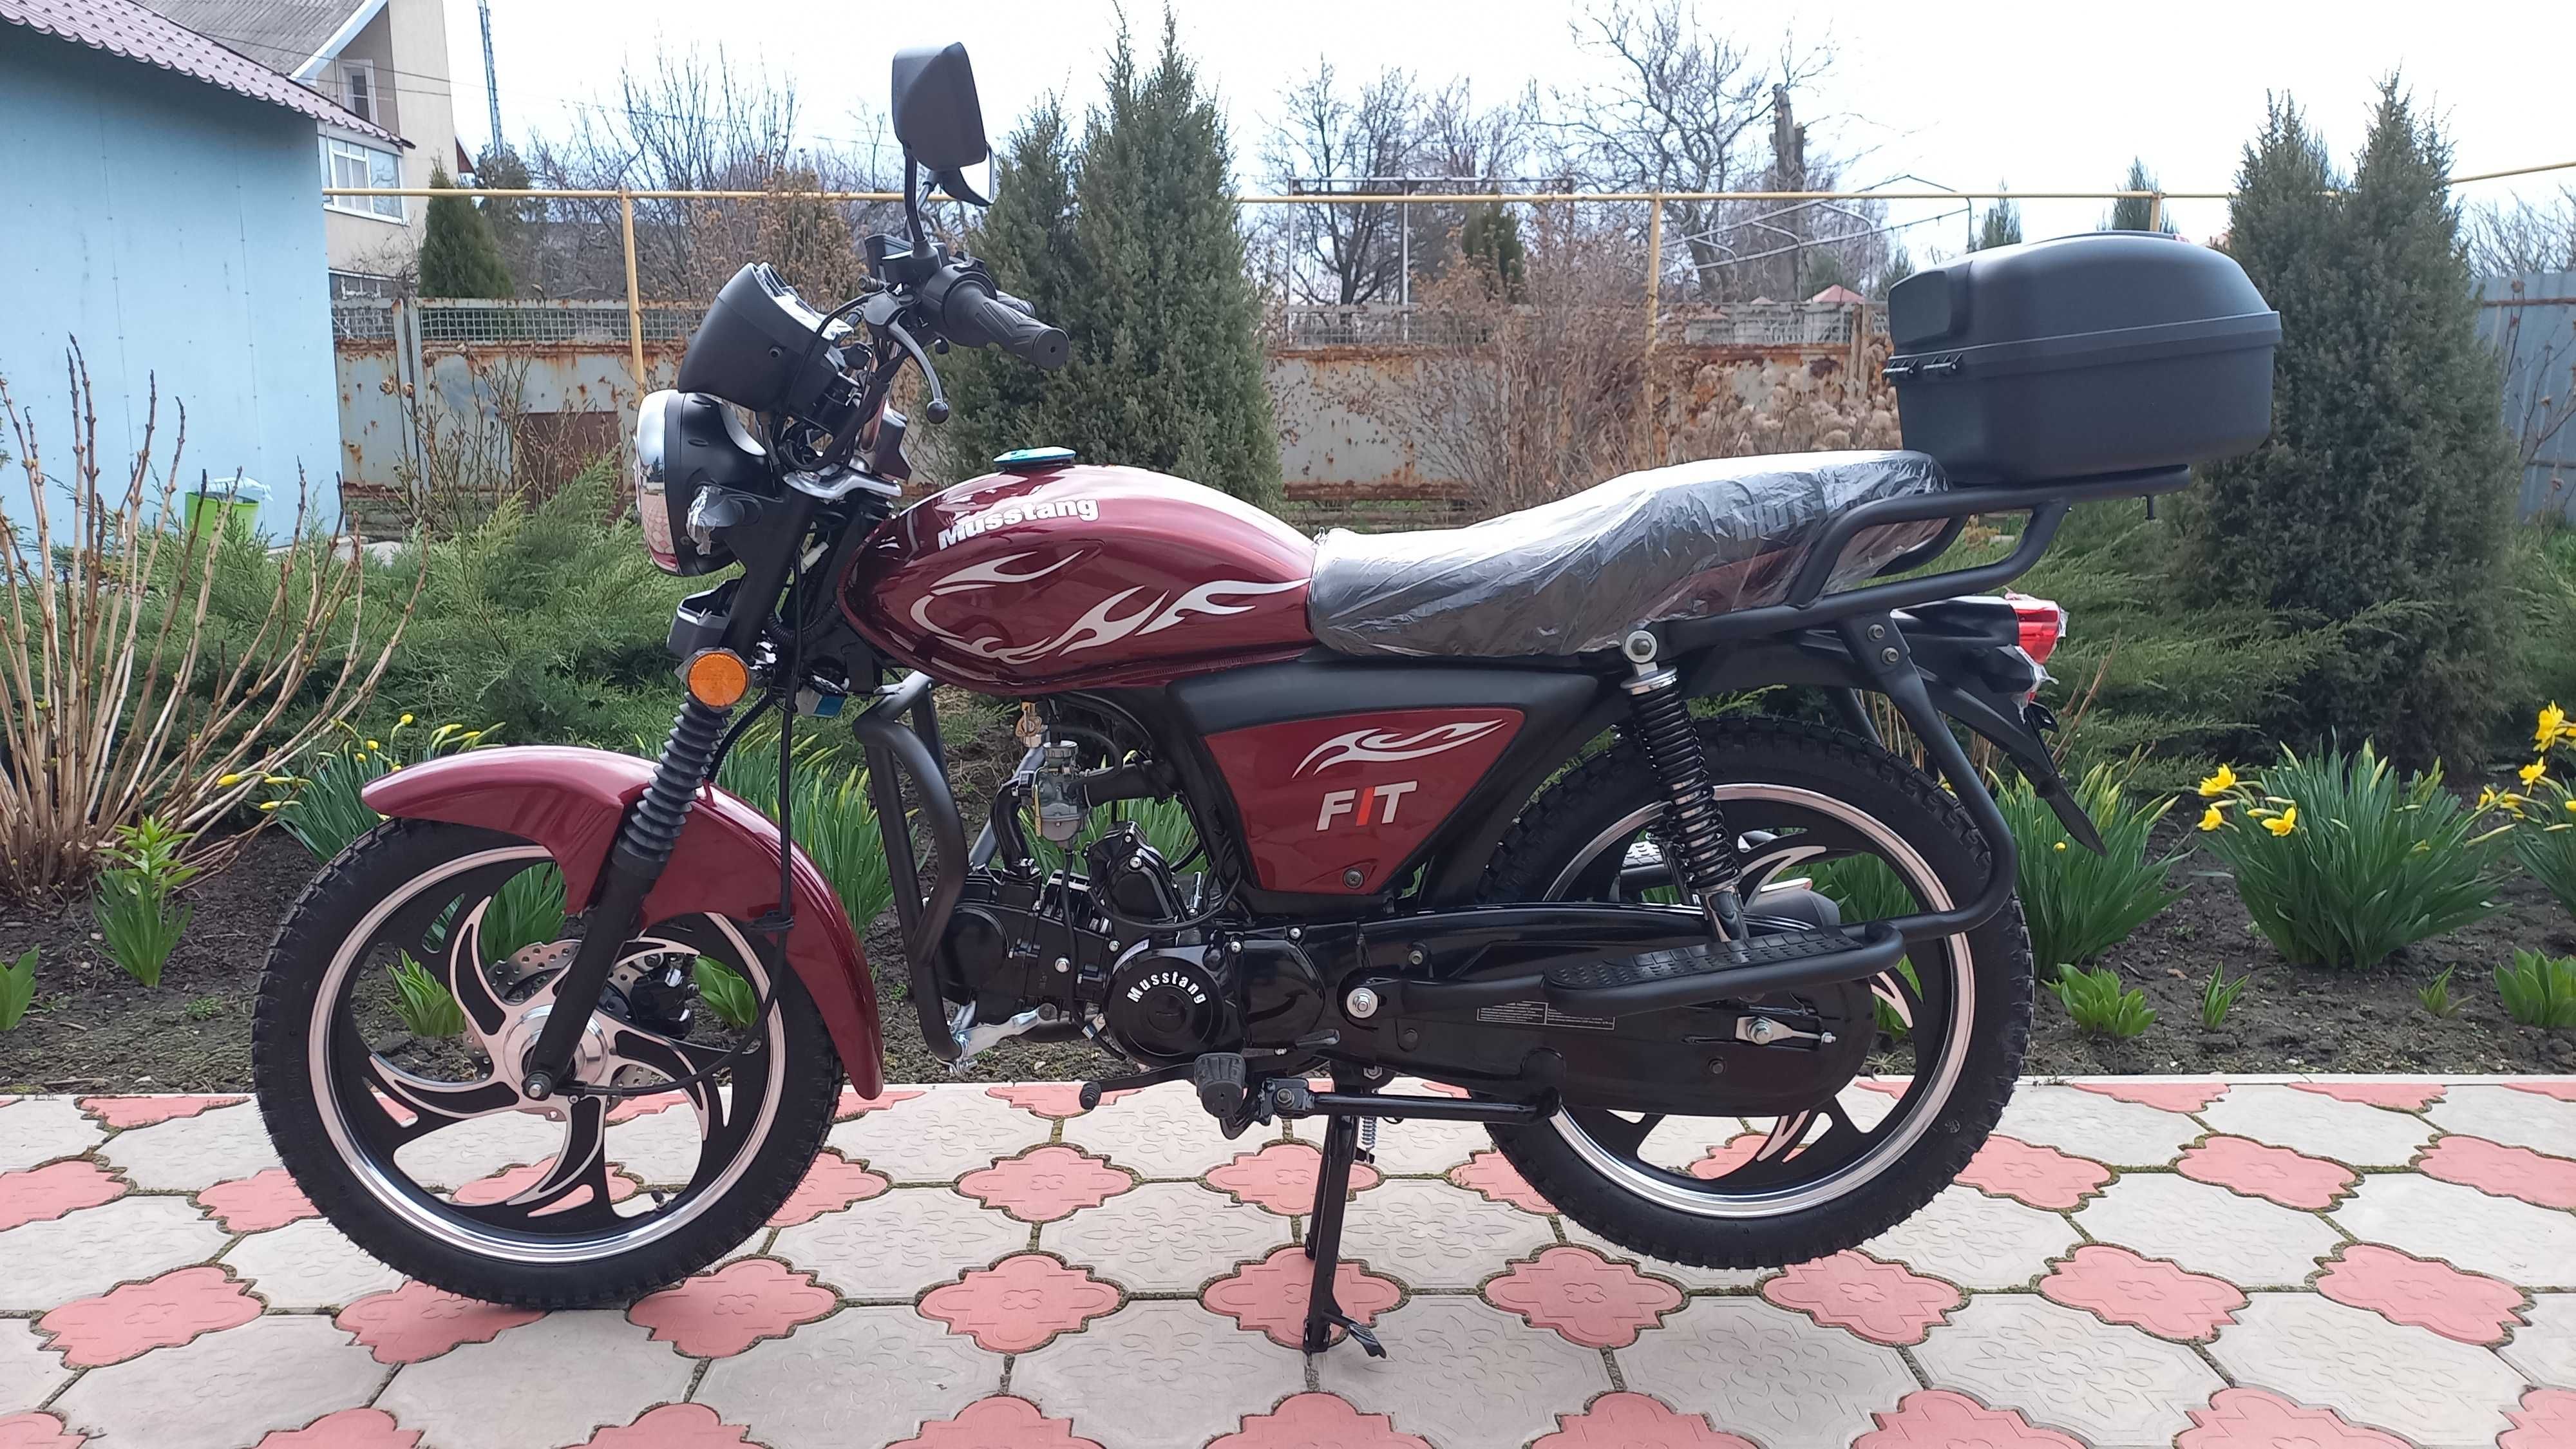 Продам нові мотоцикли Musstang Fit 125,м.Синельникове,м-н МОТО-РАЙ.